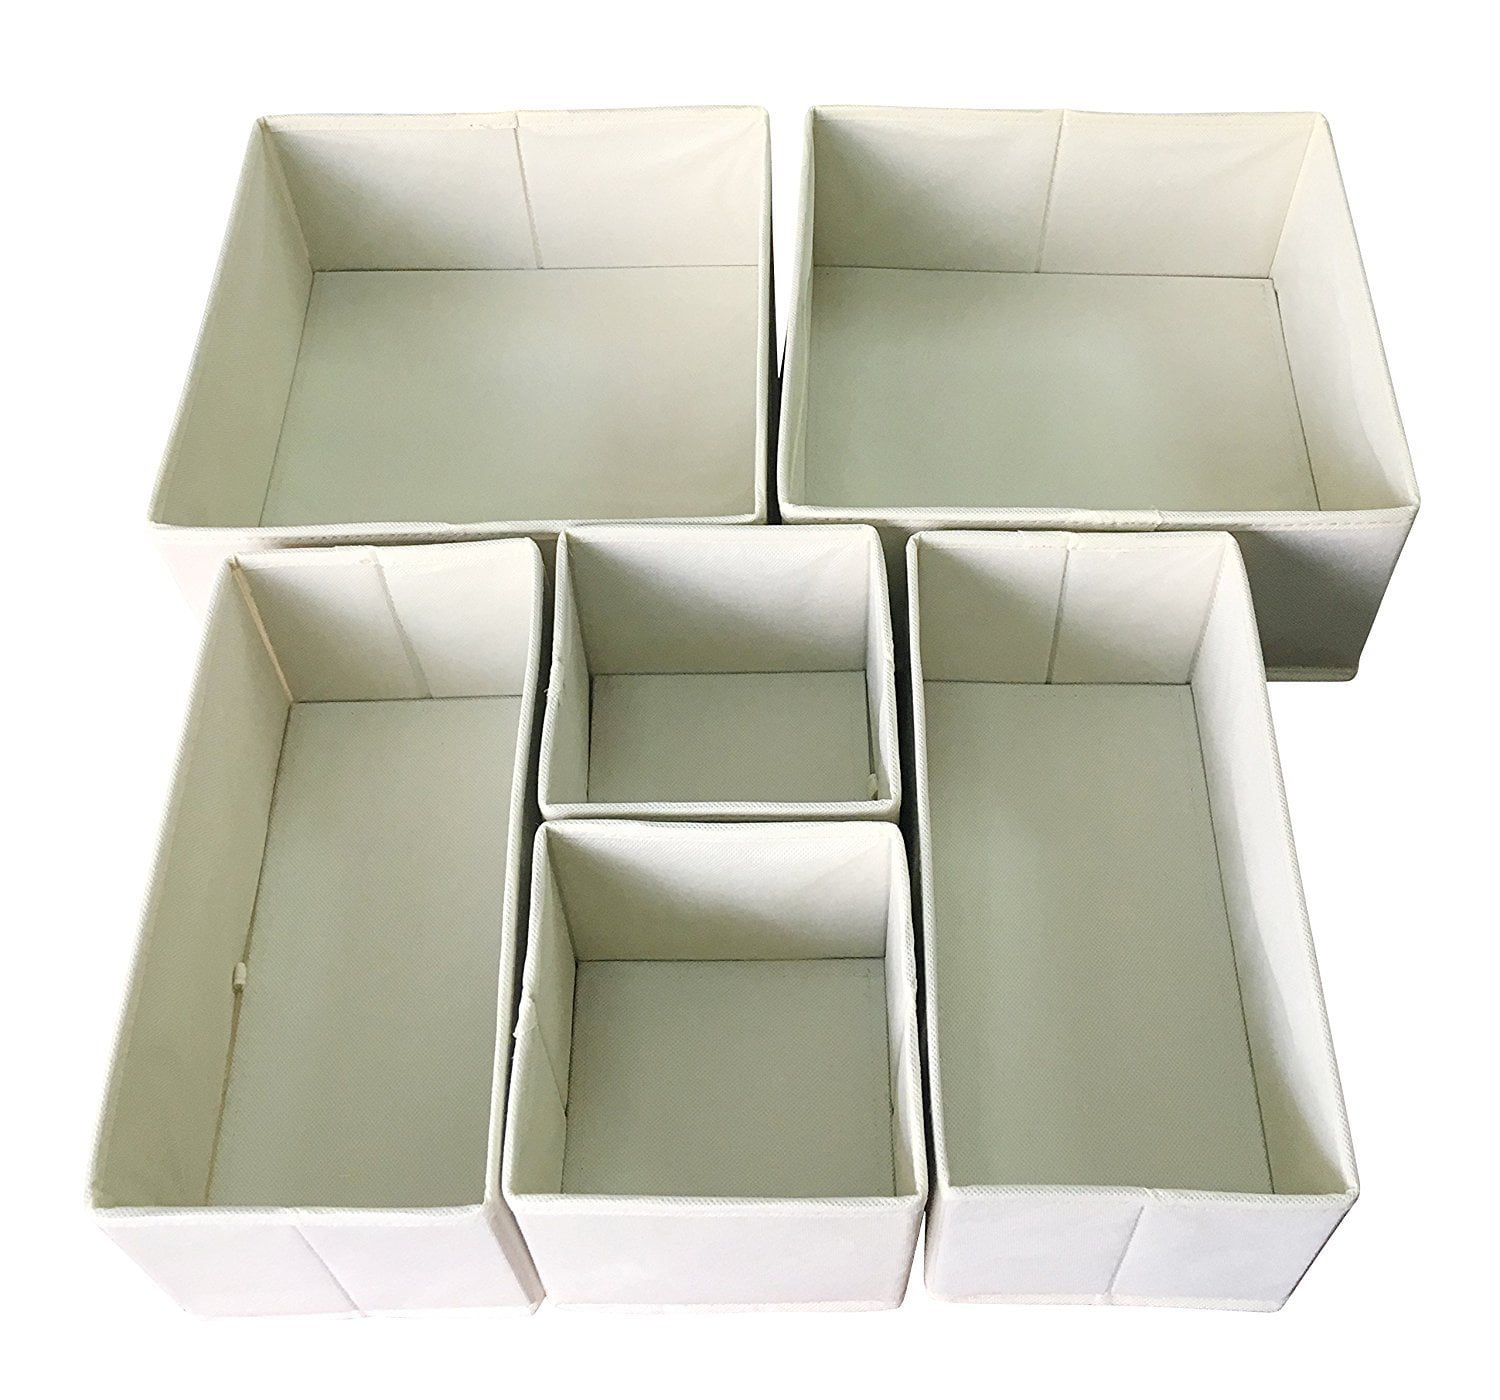 ELUCHANG Foldable Sequin Storage Basket Bin Closet Organizer Cubes Boxes for Nursery Home Drawer Organizer Clothes 4PCS,Pink